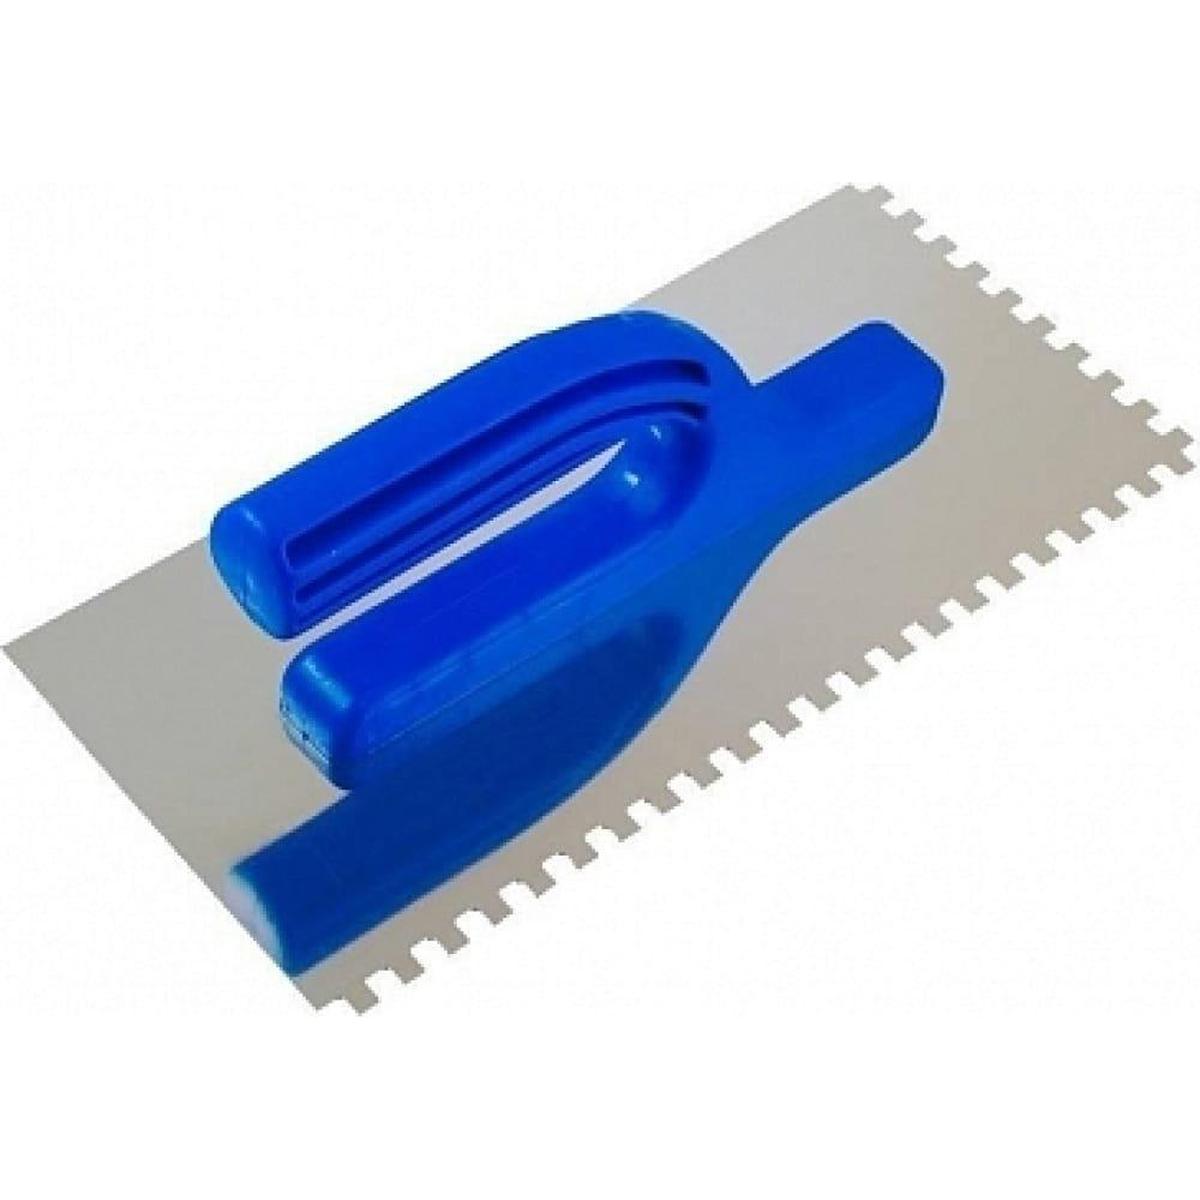 89-0254, Гладилка нержавеющая 130х270 мм, зуб 8х8 мм, пластиковая ручка